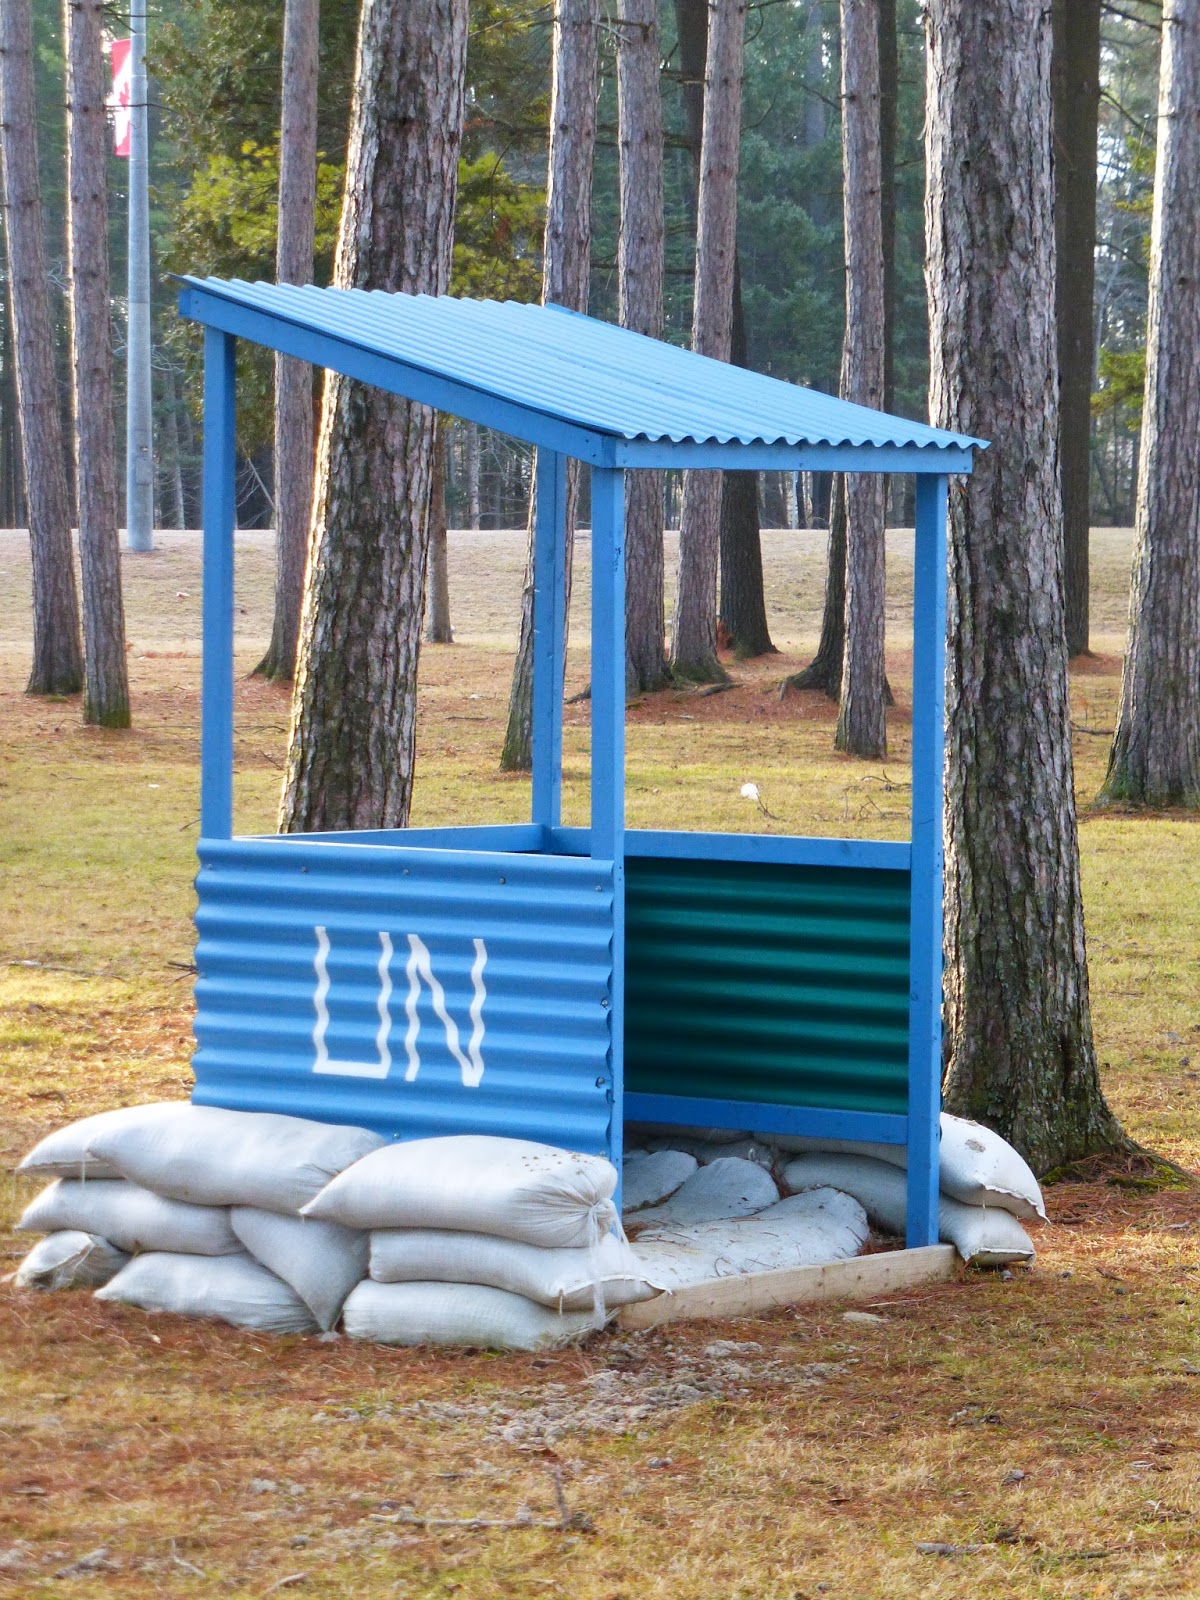 United Nations guard post